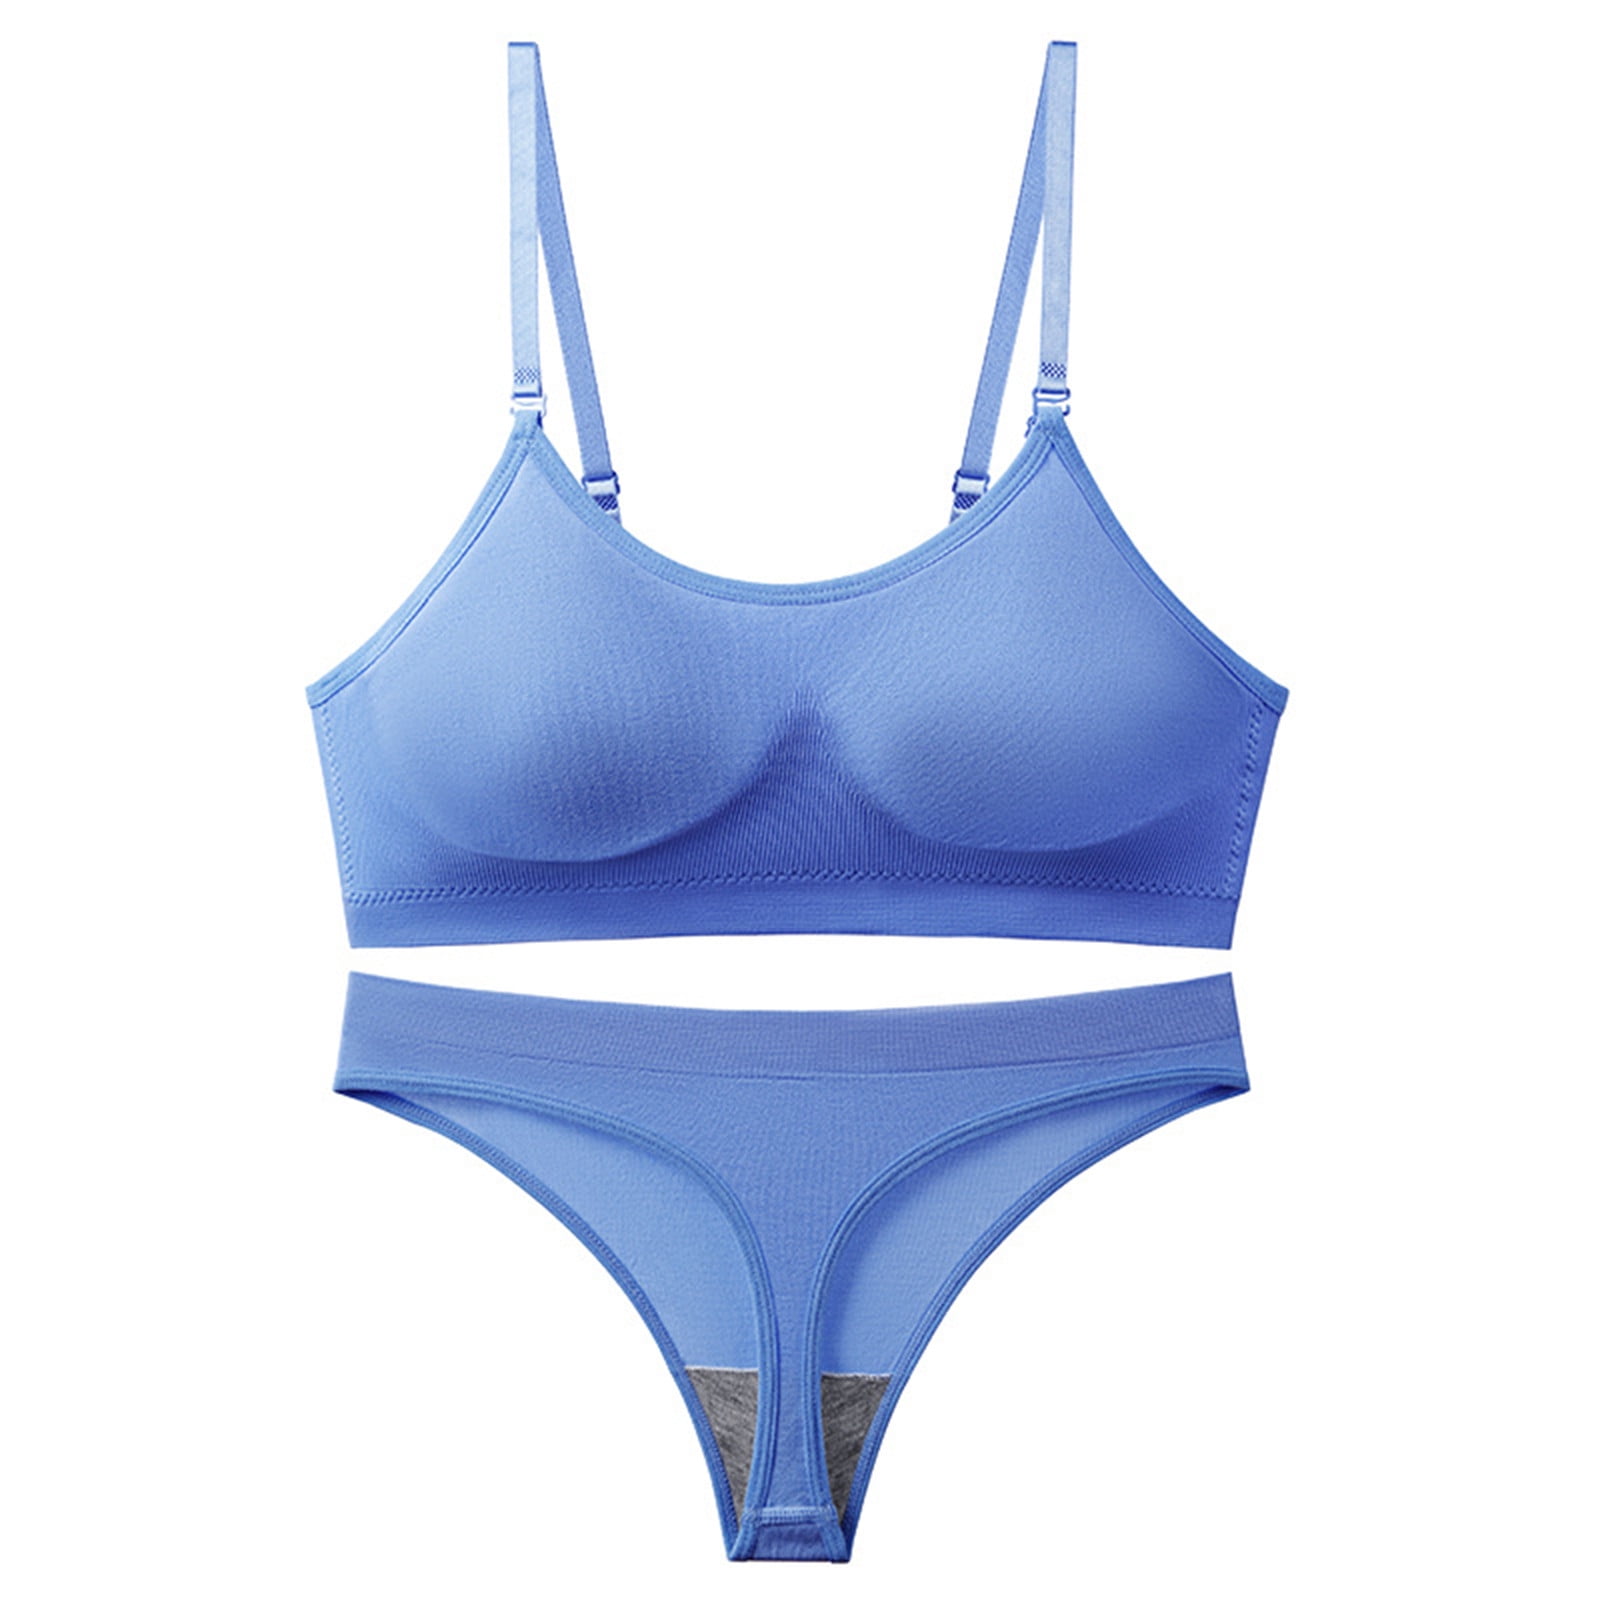 Buy Valentine Women's Sky Blue Color Bra-Panty at